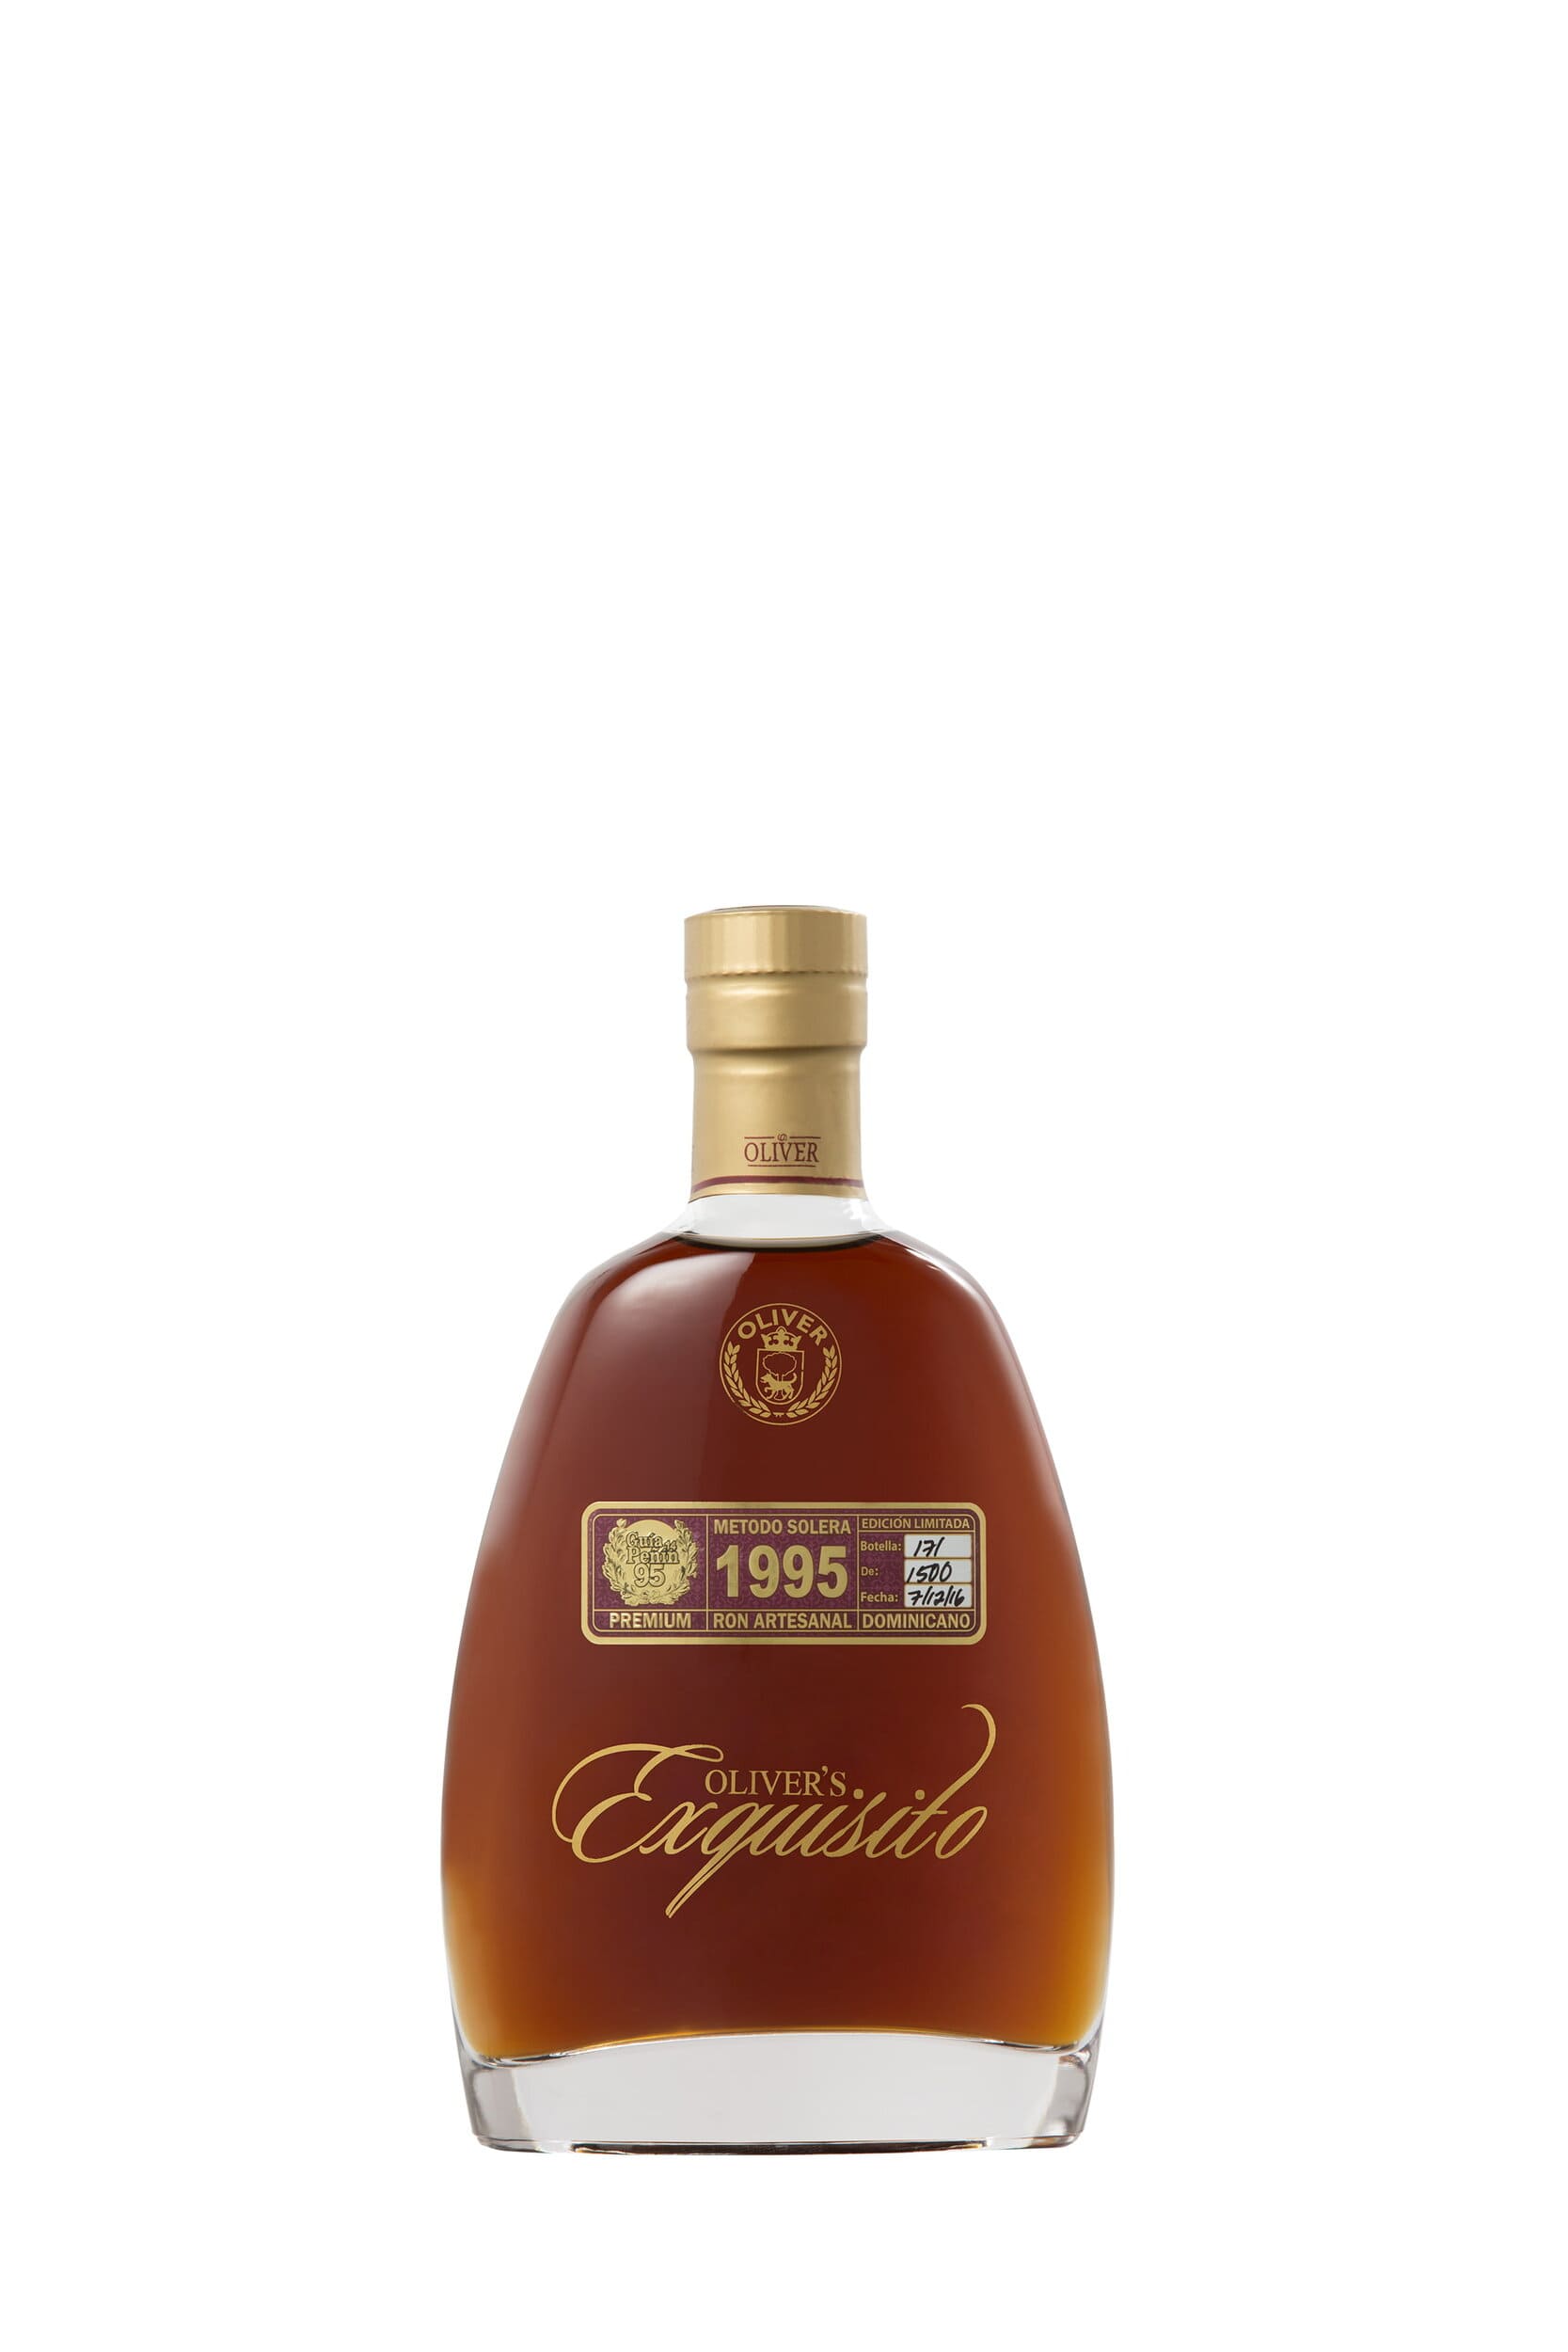 Whiskies du monde exquisito 1995 bouteille